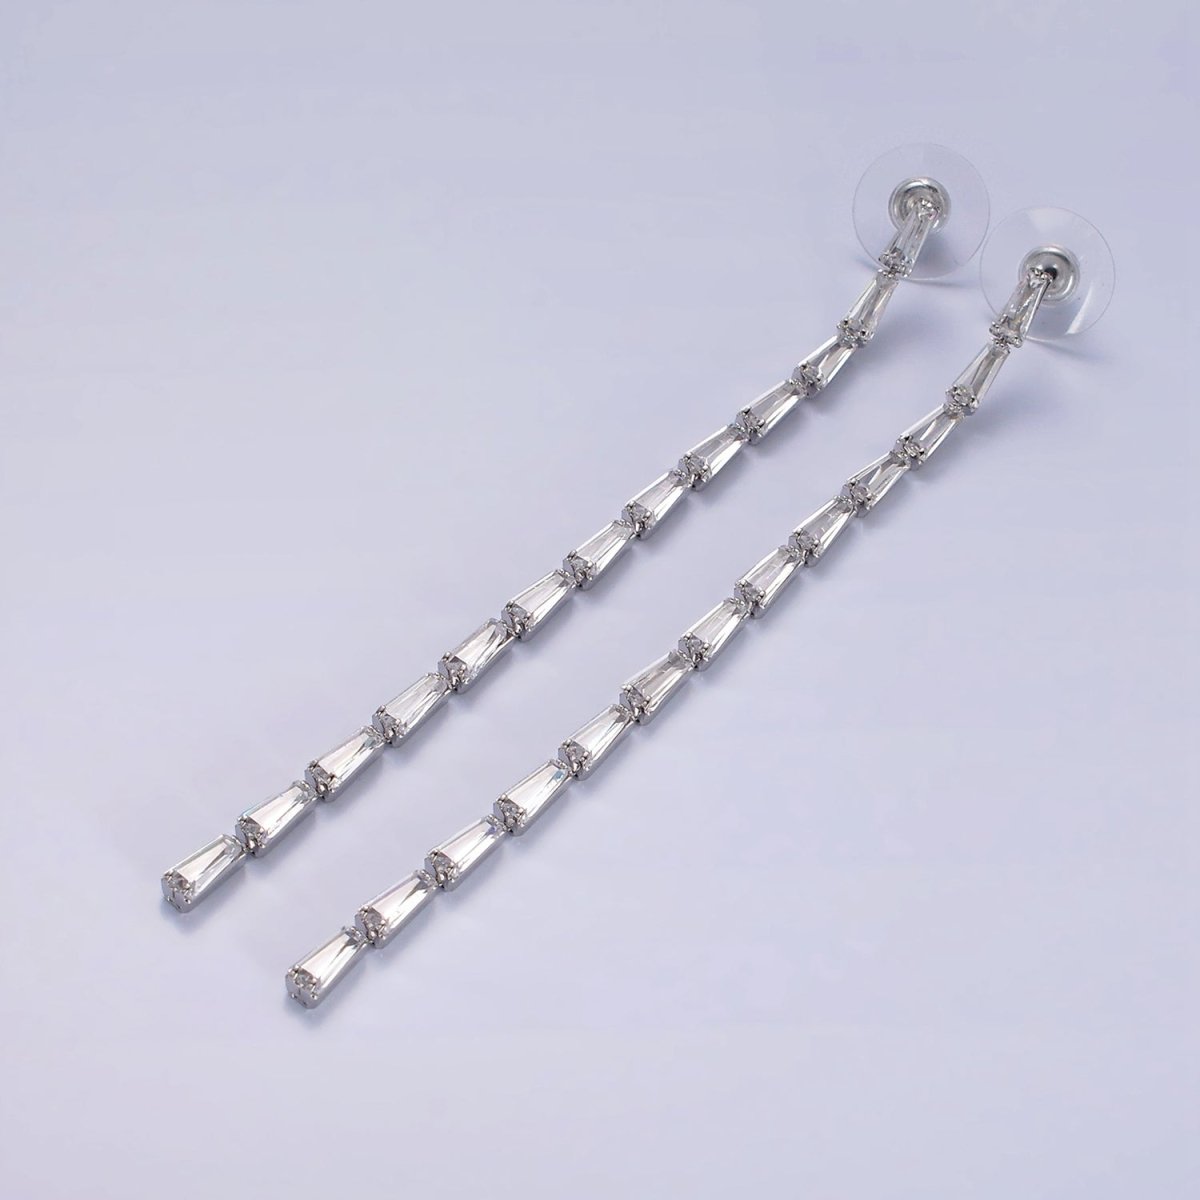 100mm Clear Baguette CZ Linear Drop Stud Earrings in Gold & Silver | AE289 AE290 - DLUXCA